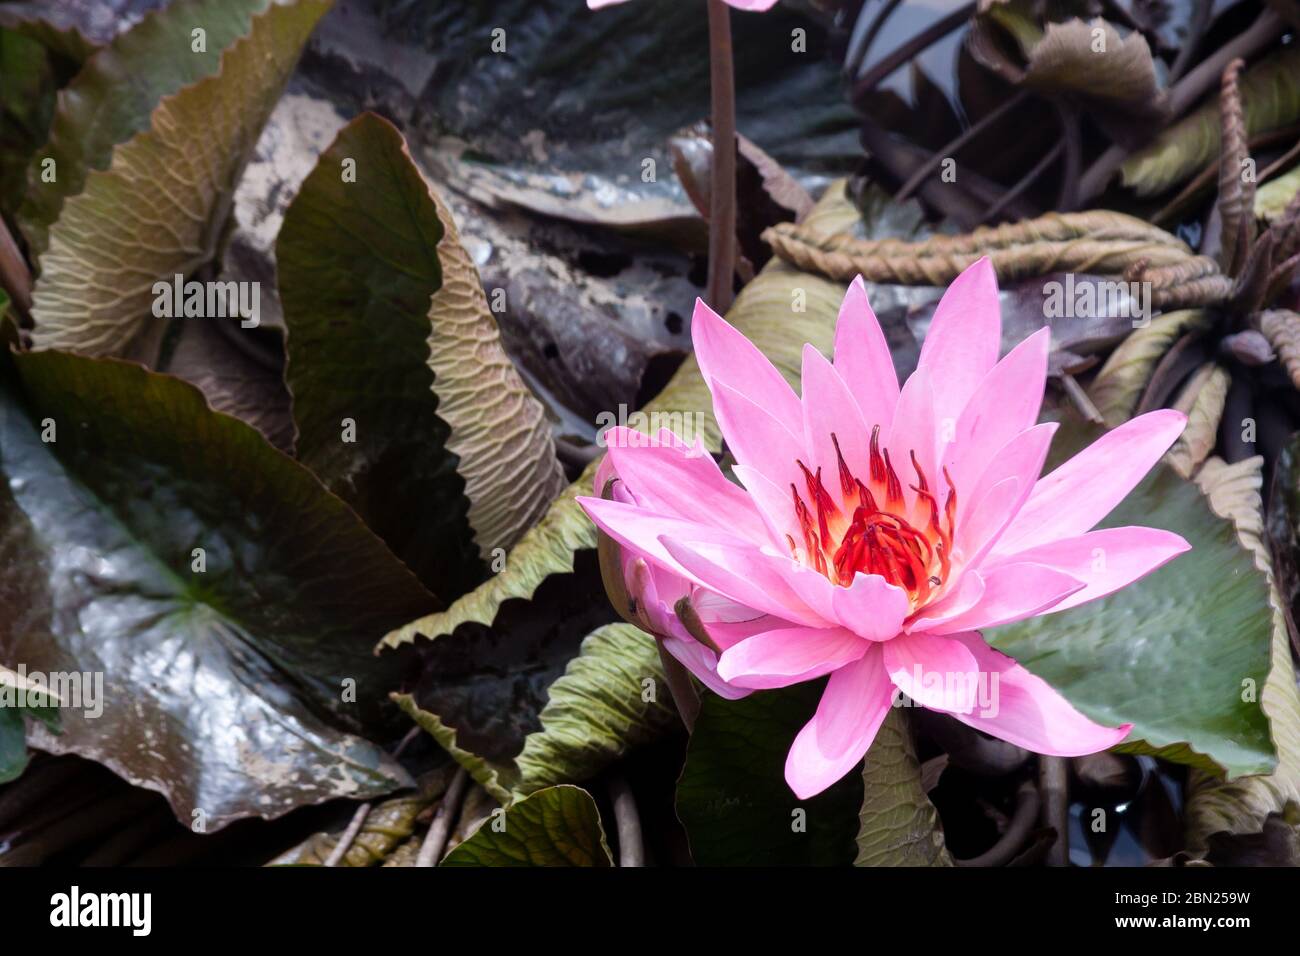 Wilde rosa wasser lilie oder Lotusblume (Nelumbo nucifera) im Wasser. Nymphaea im Teich. Indonesien, Papua Neu Guinea Stockfoto